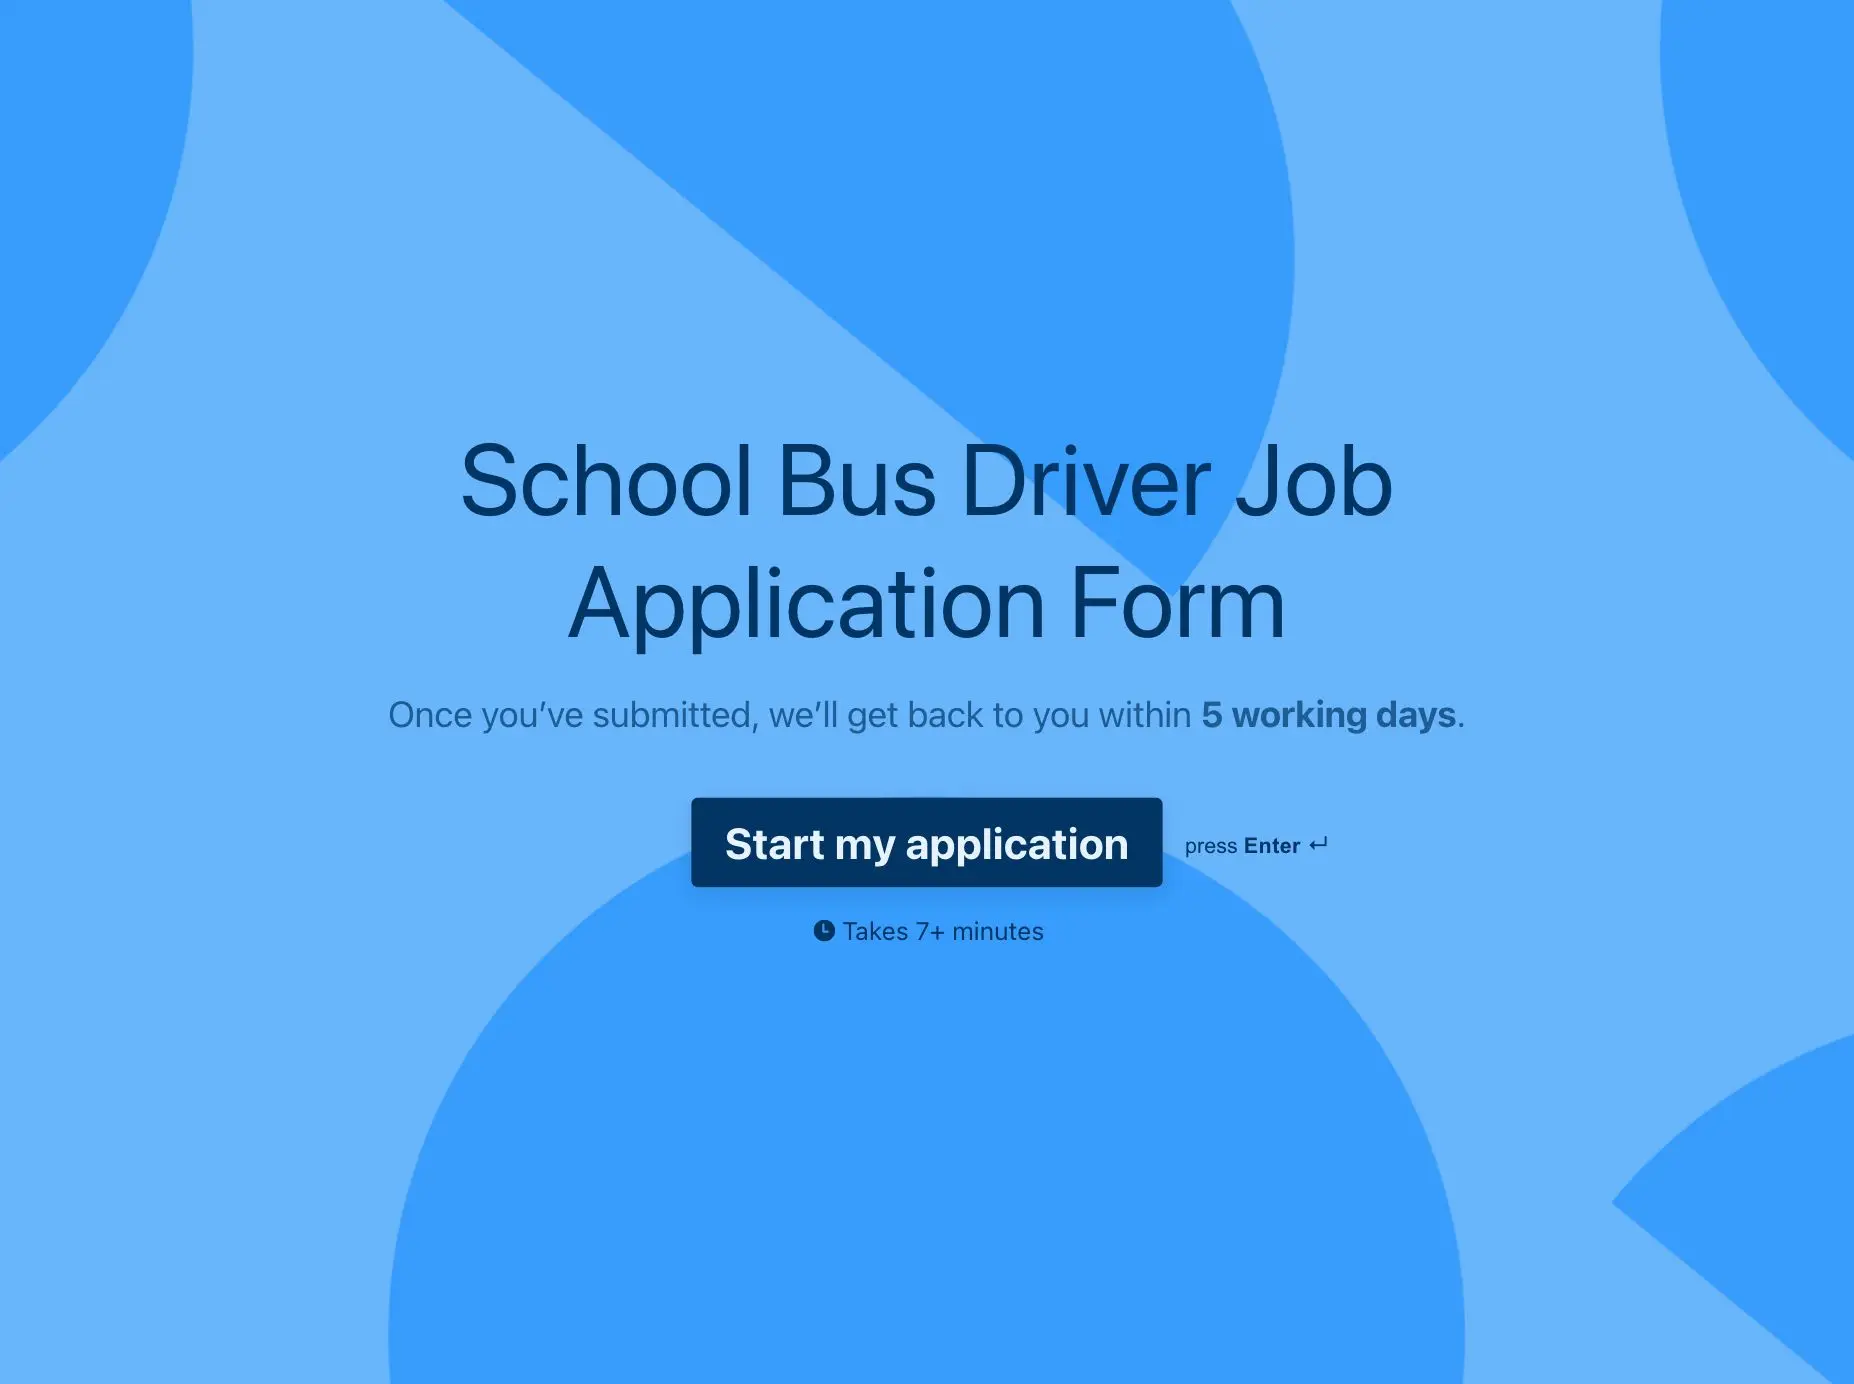 School Bus Driver Job Application Form Template Hero